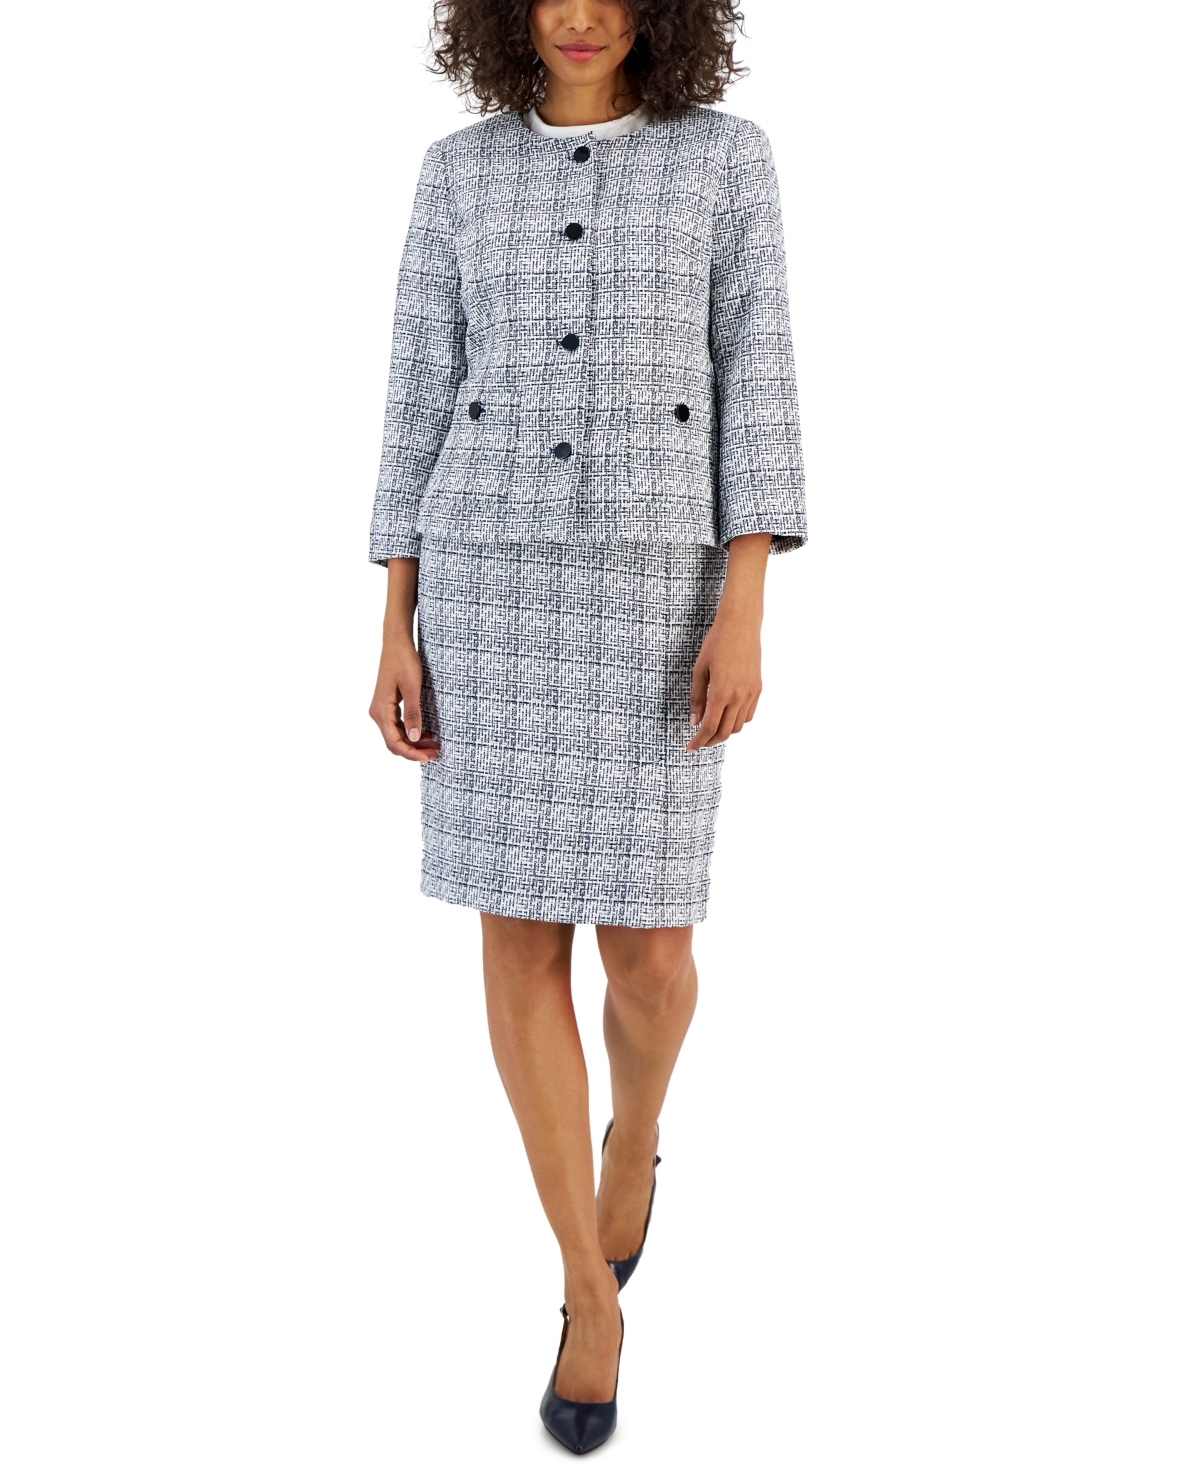 Women's Tweed Button-Front Jacket & Pencil Skirt Suit - Blue / White Combo